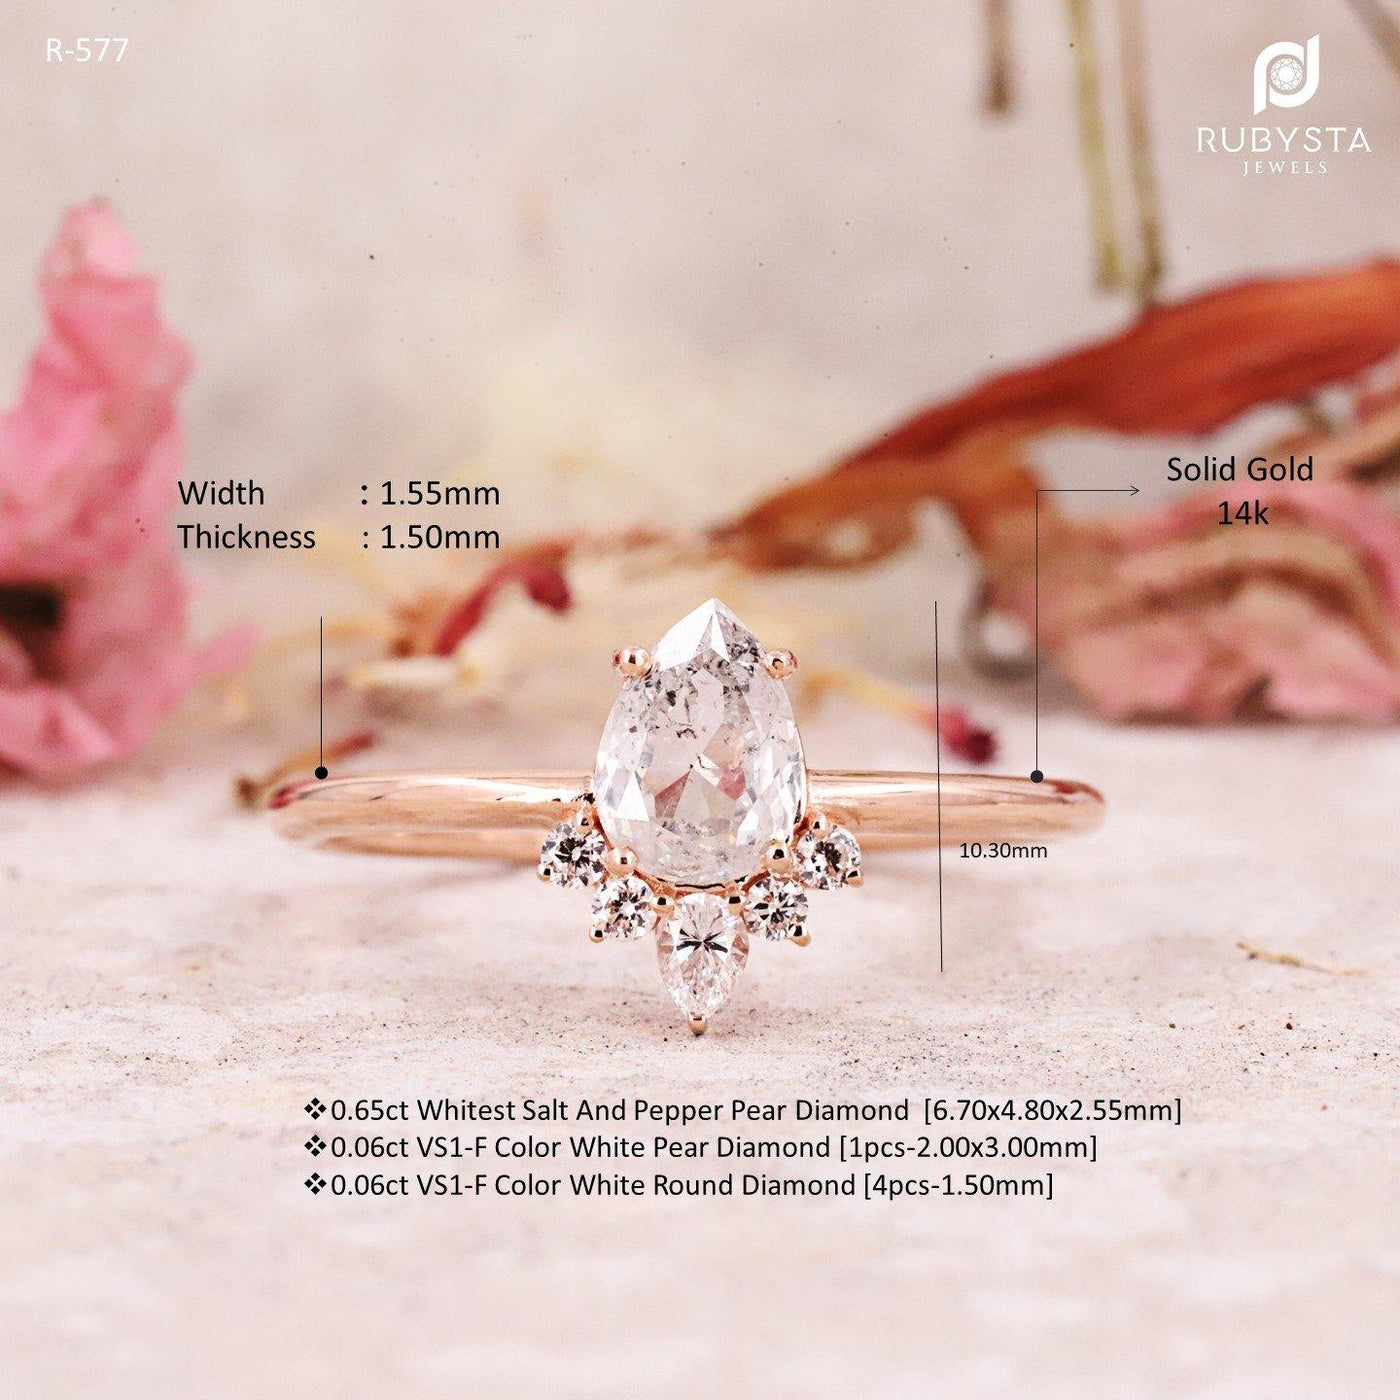 Salt and pepper diamond ring | Pear diamond ring | 14K Solid Rose gold Ring - Rubysta